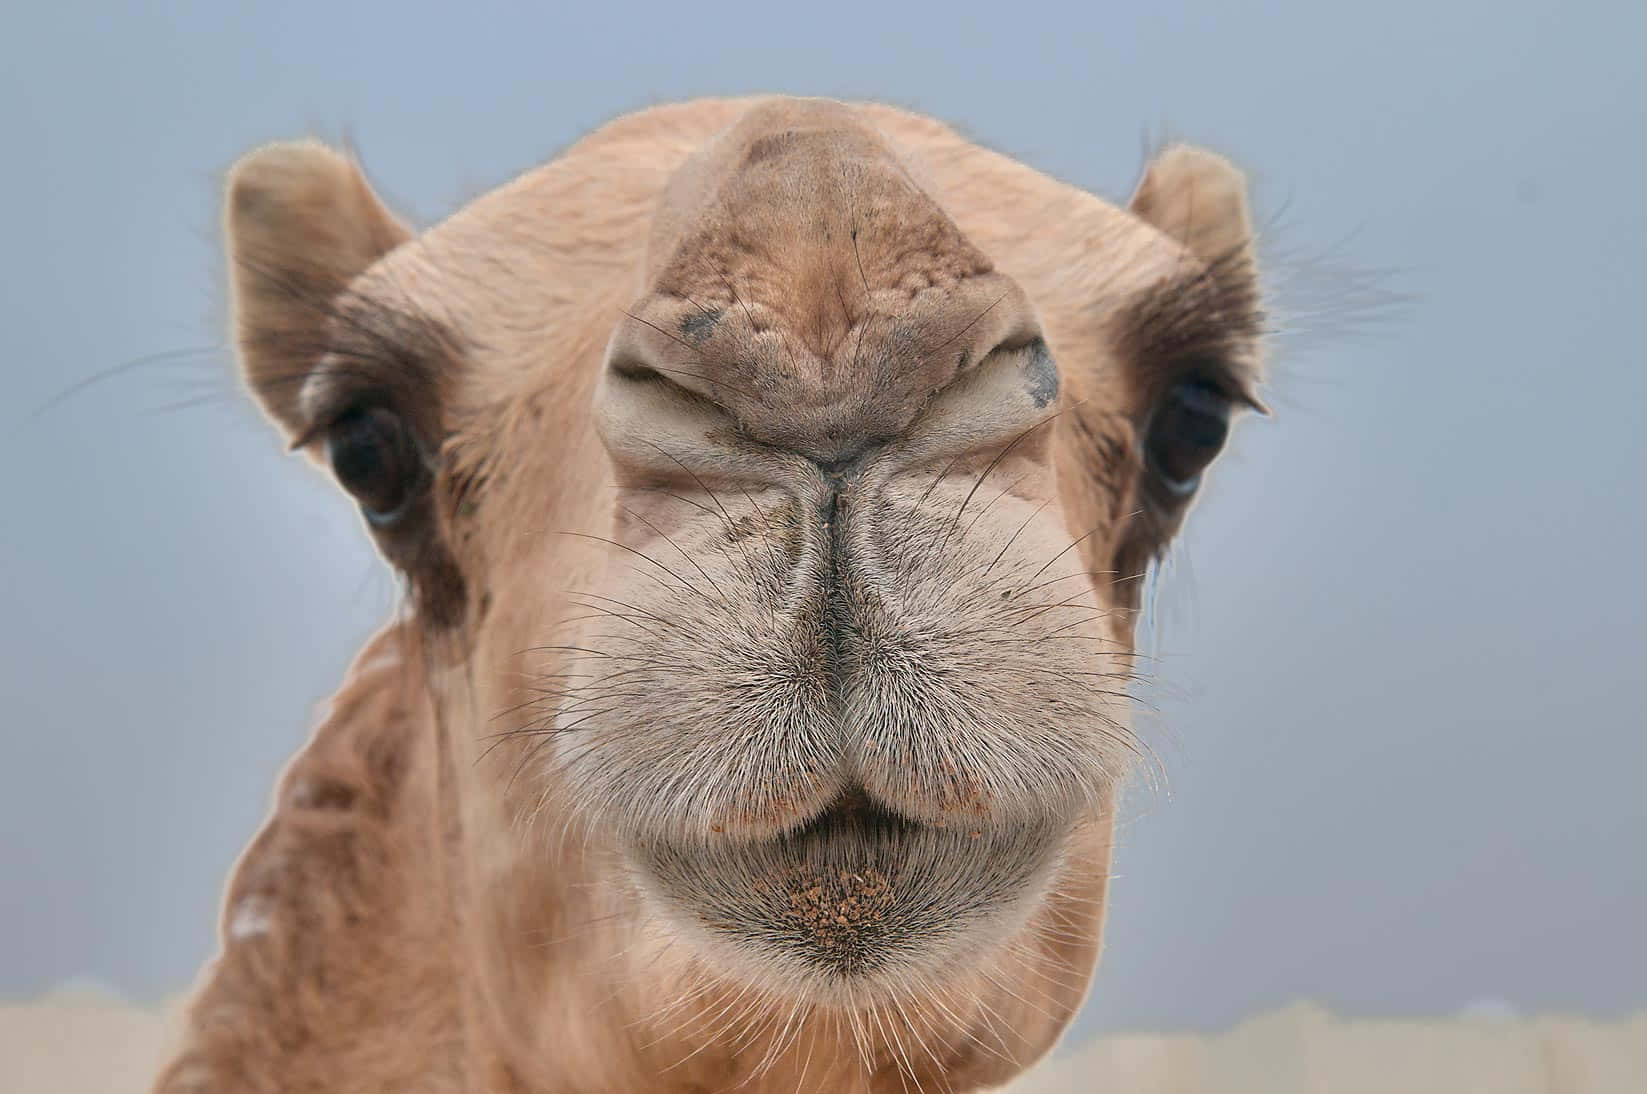 An up close look at a majestic dromedary camel